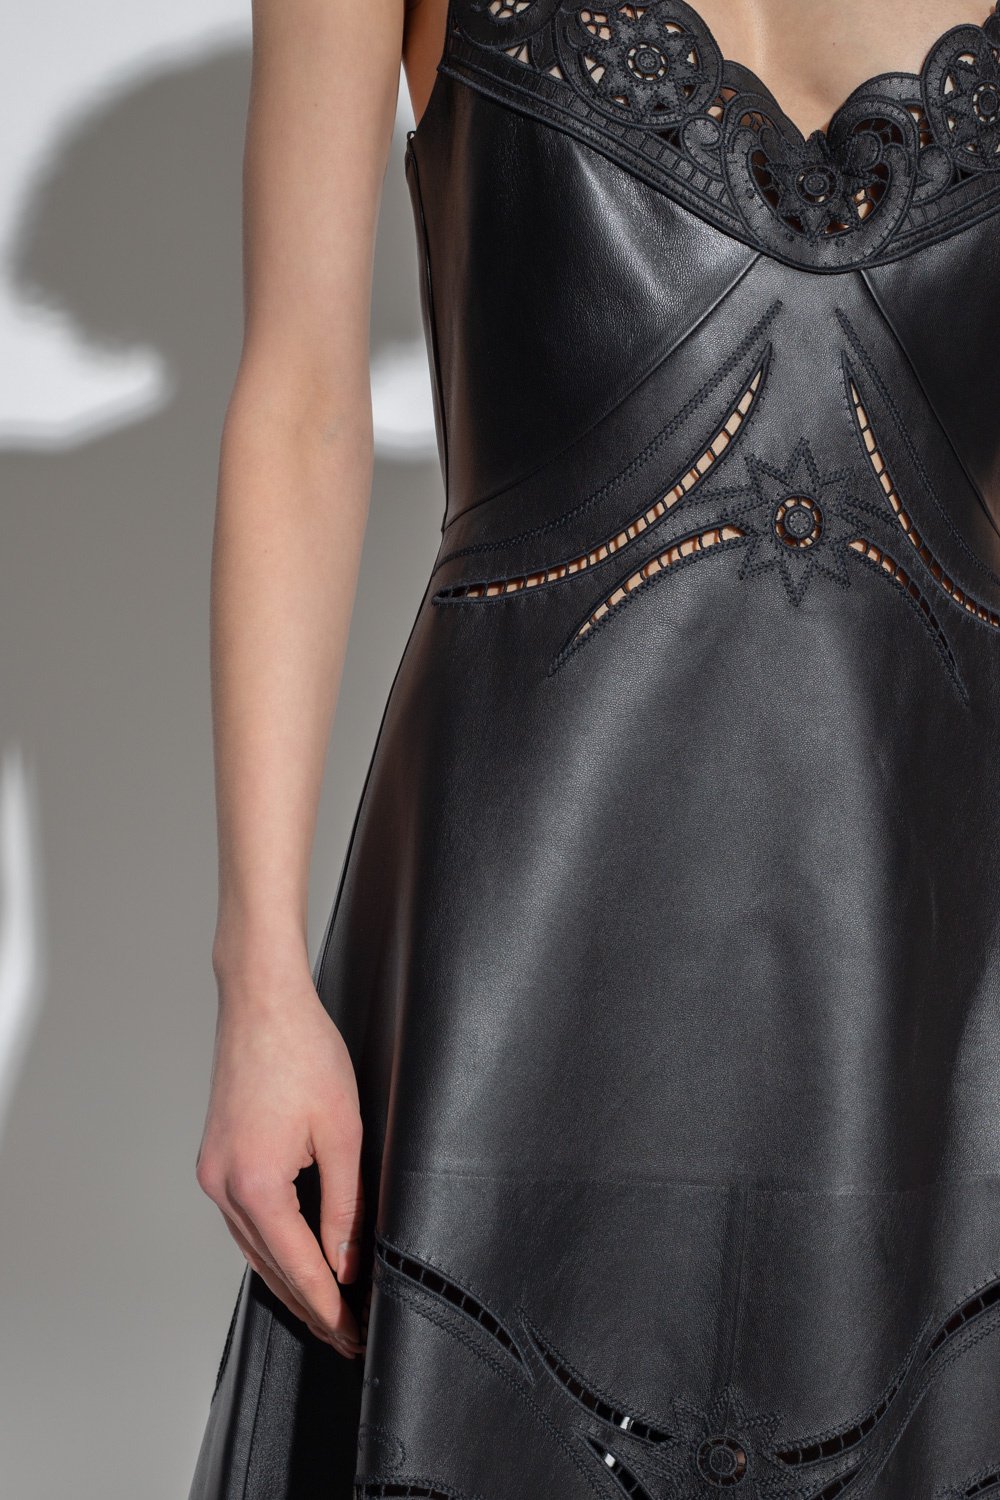 Chloé Leather dress